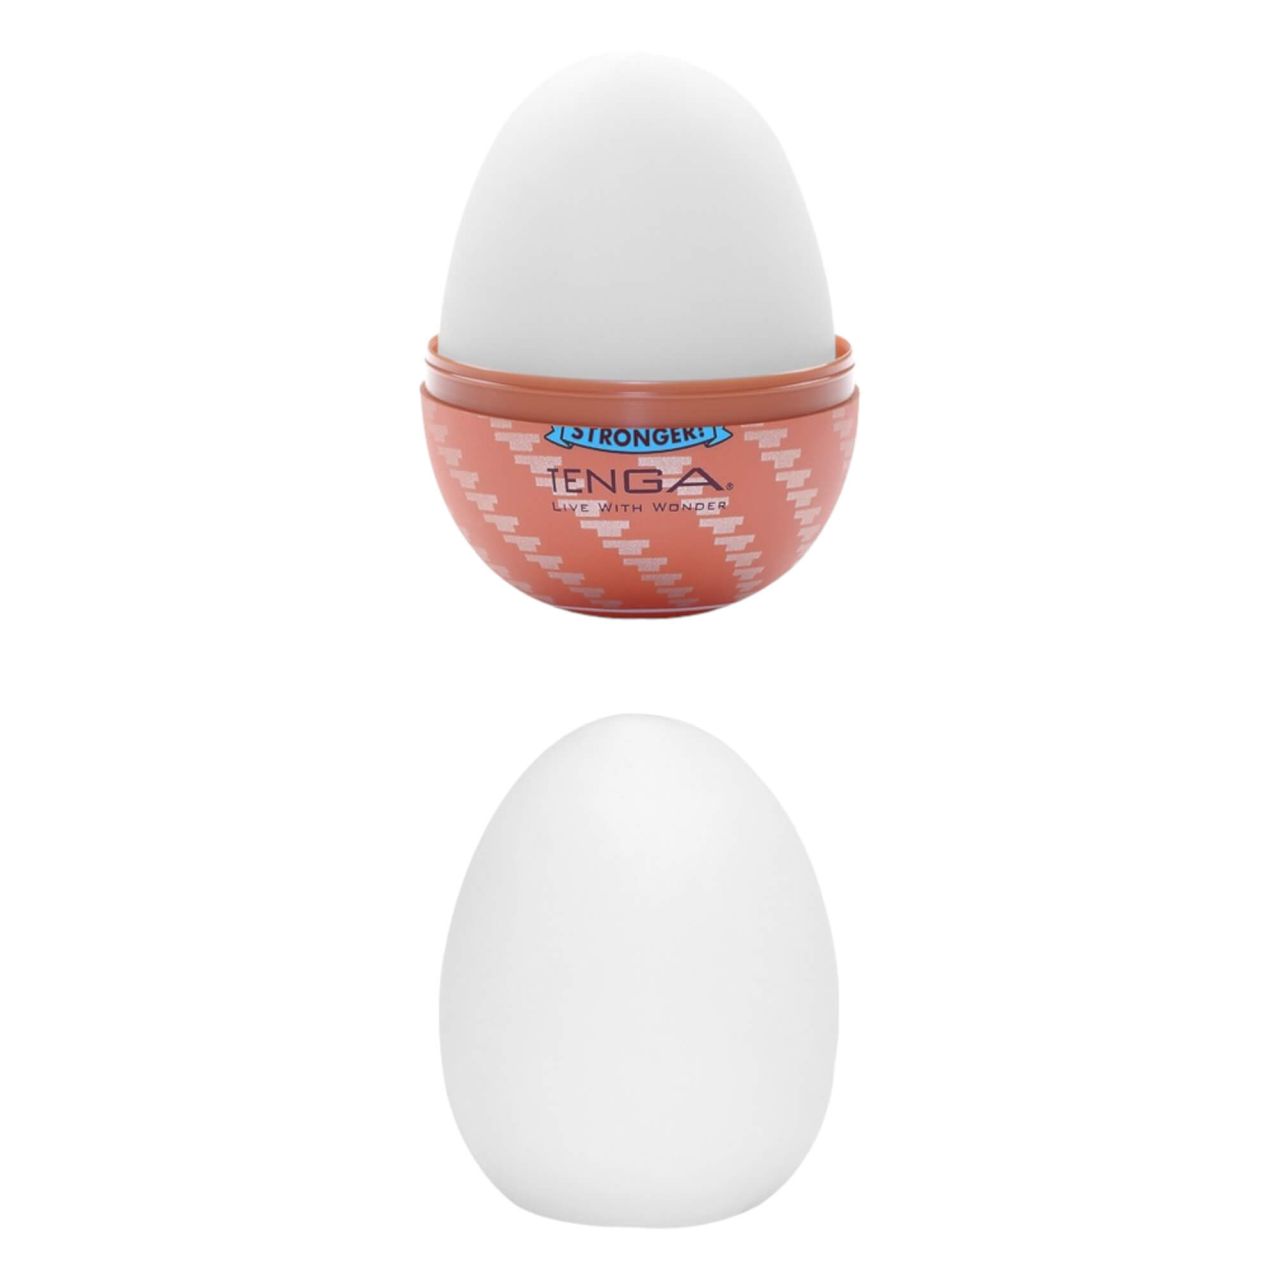 TENGA Egg Spiral Stronger - maszturbációs tojás (1db)